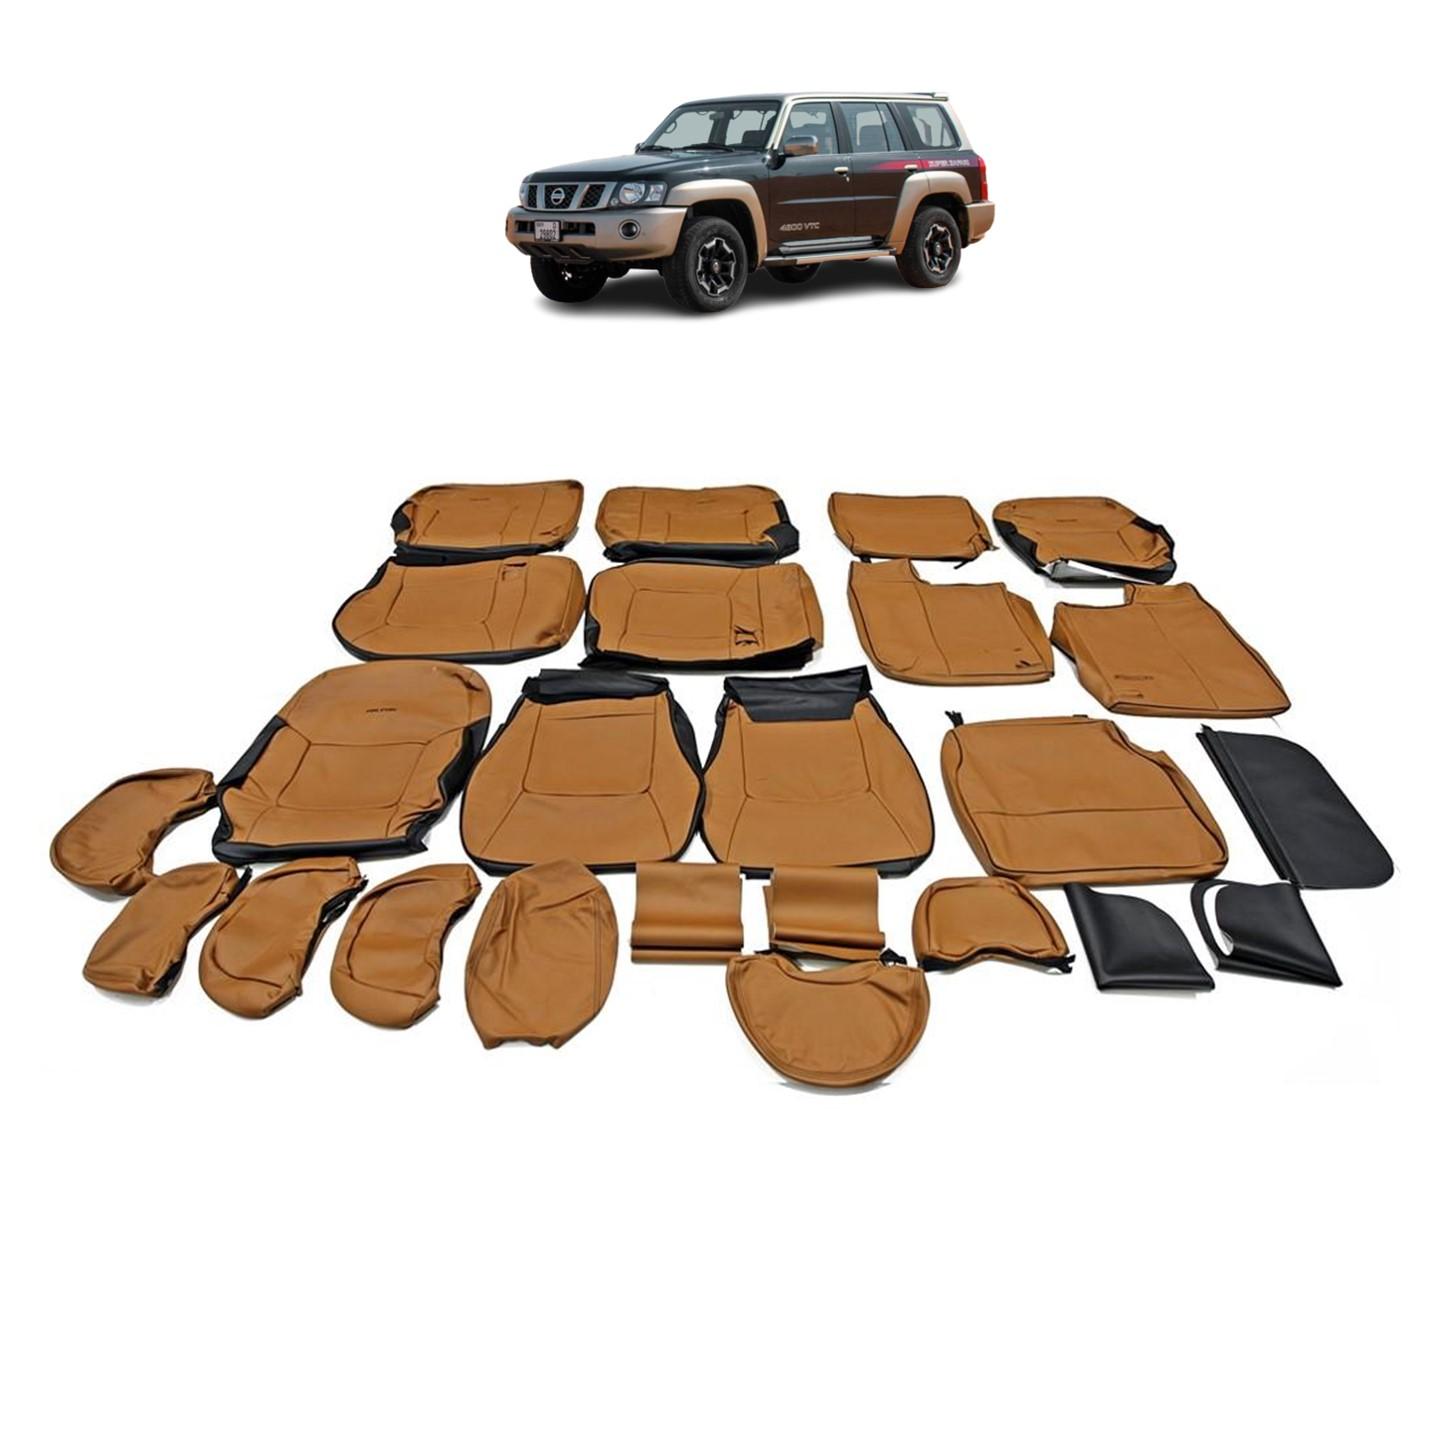 Leather Upholstry (Nissan Patrol Y61 VTC GU Safari Falcon Edition)